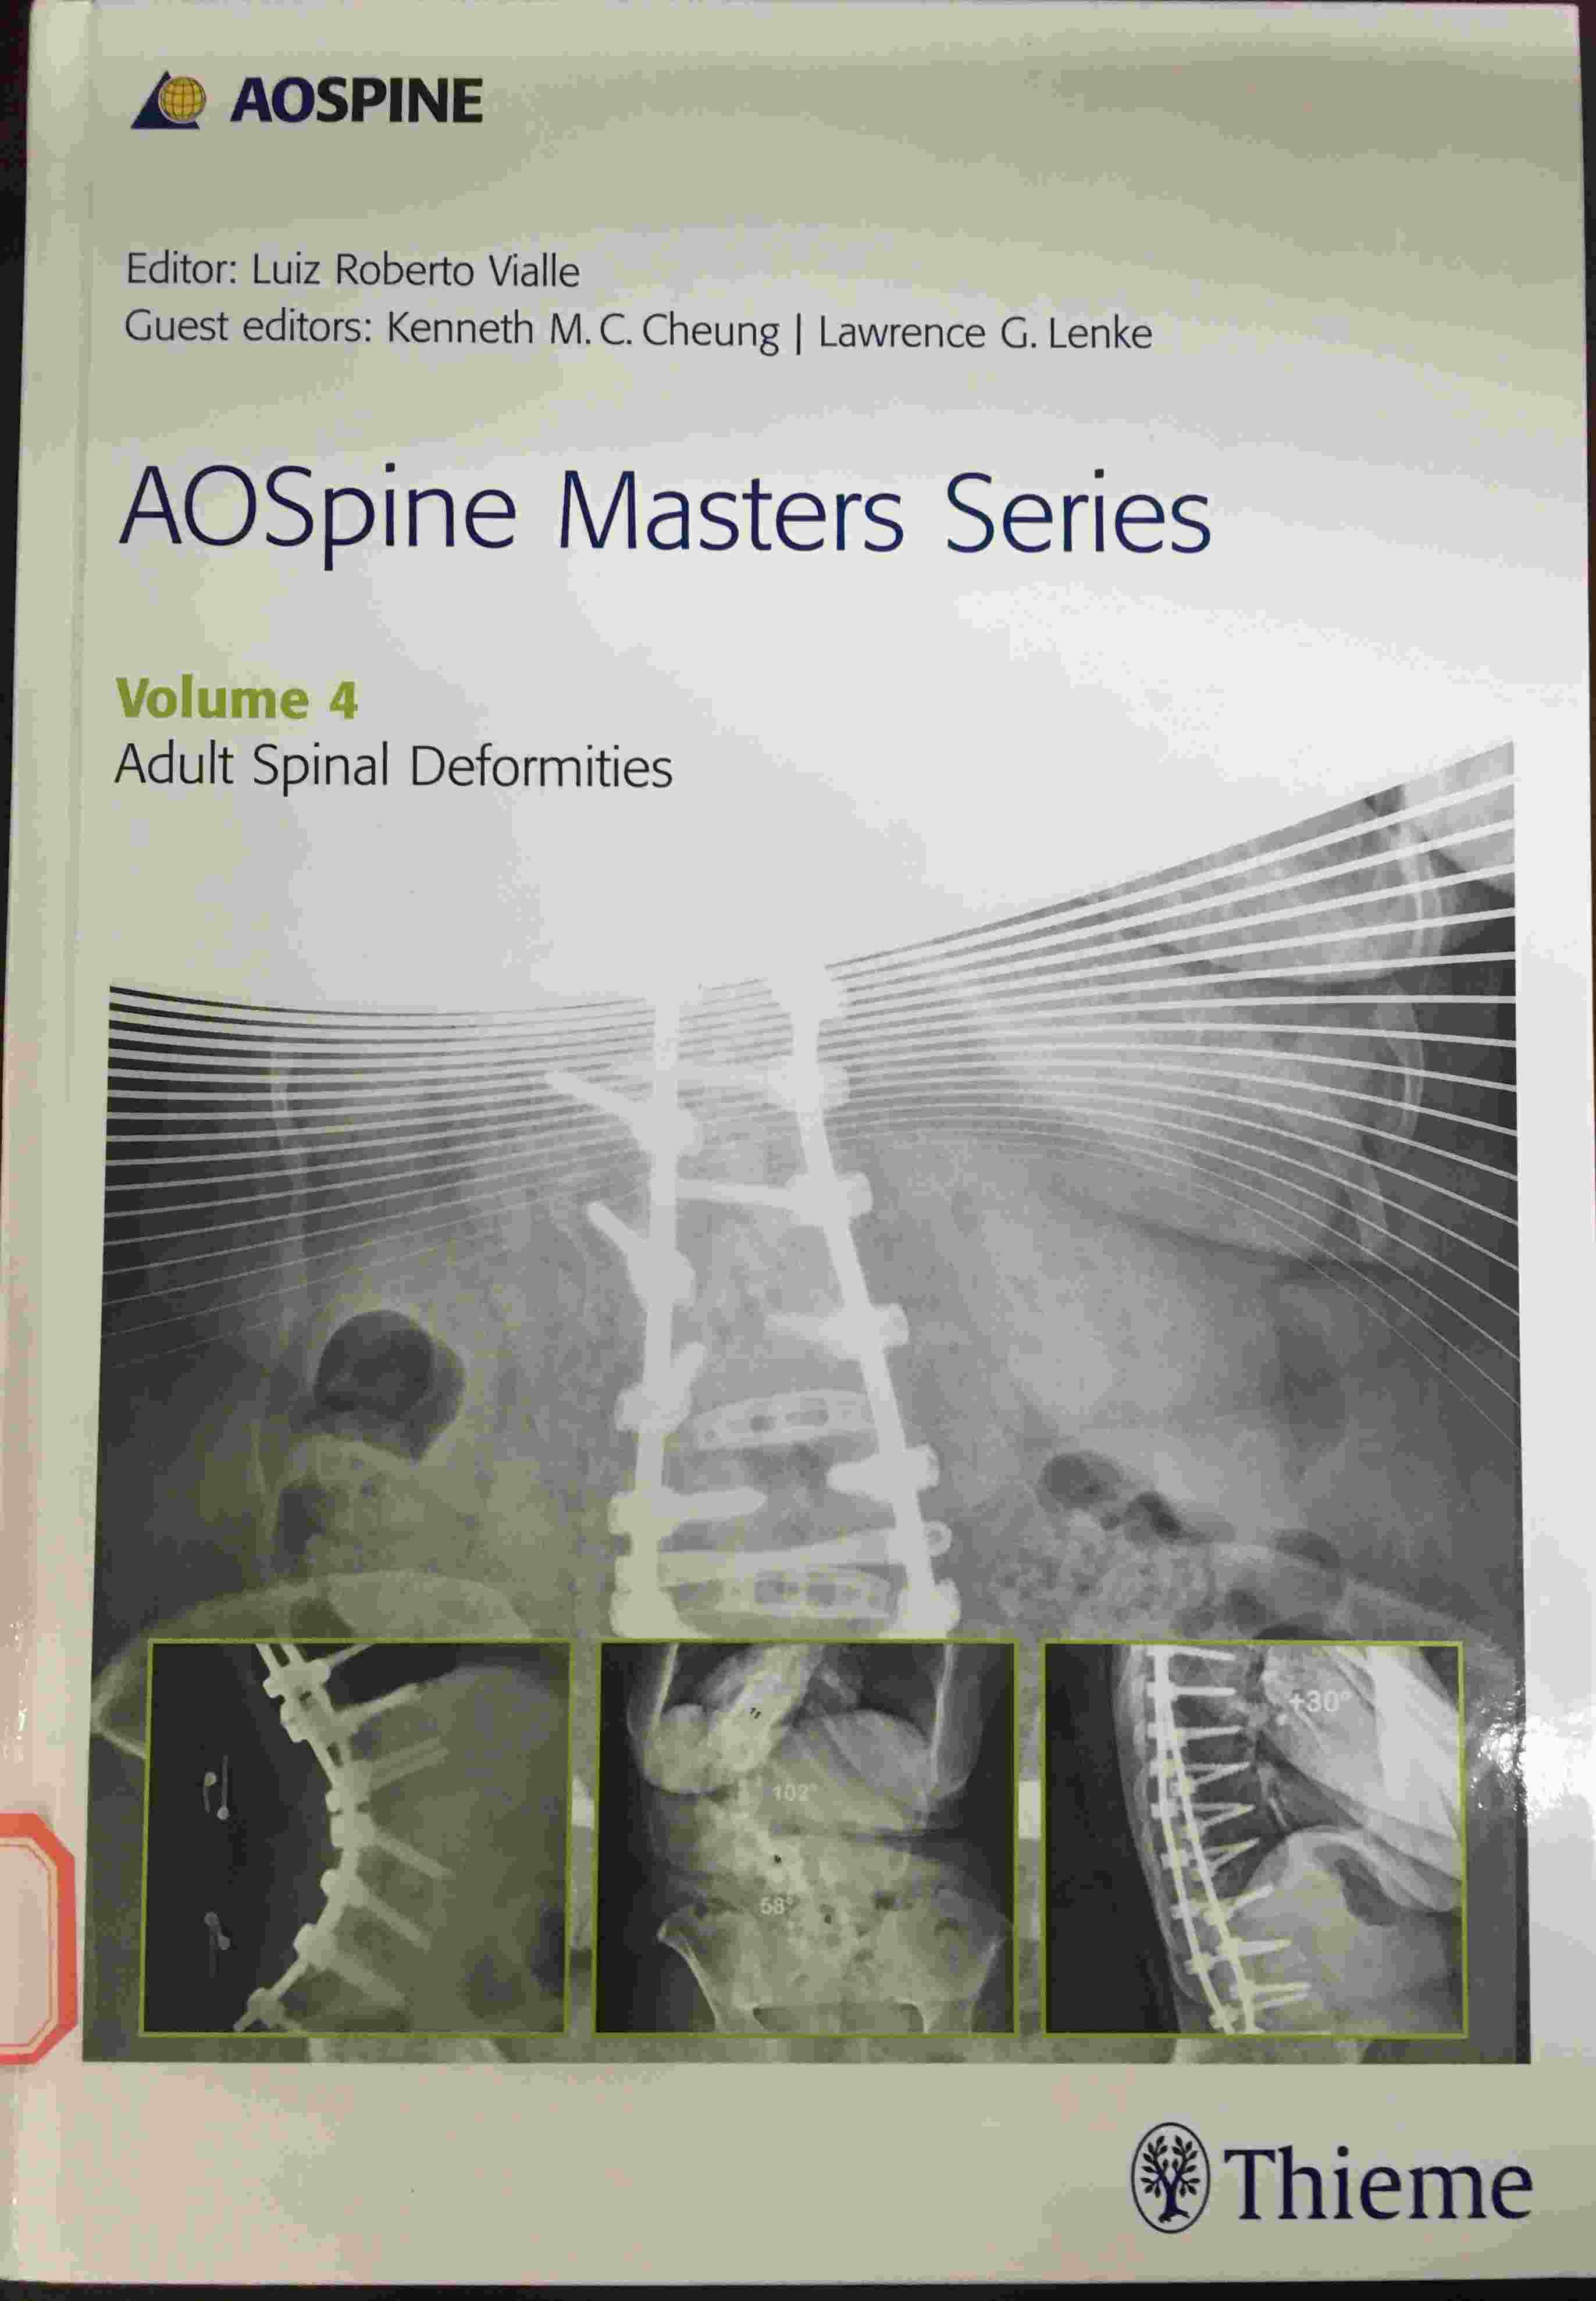 «Aospine Master Series: Adult Spinal Deformities Volume 4 »